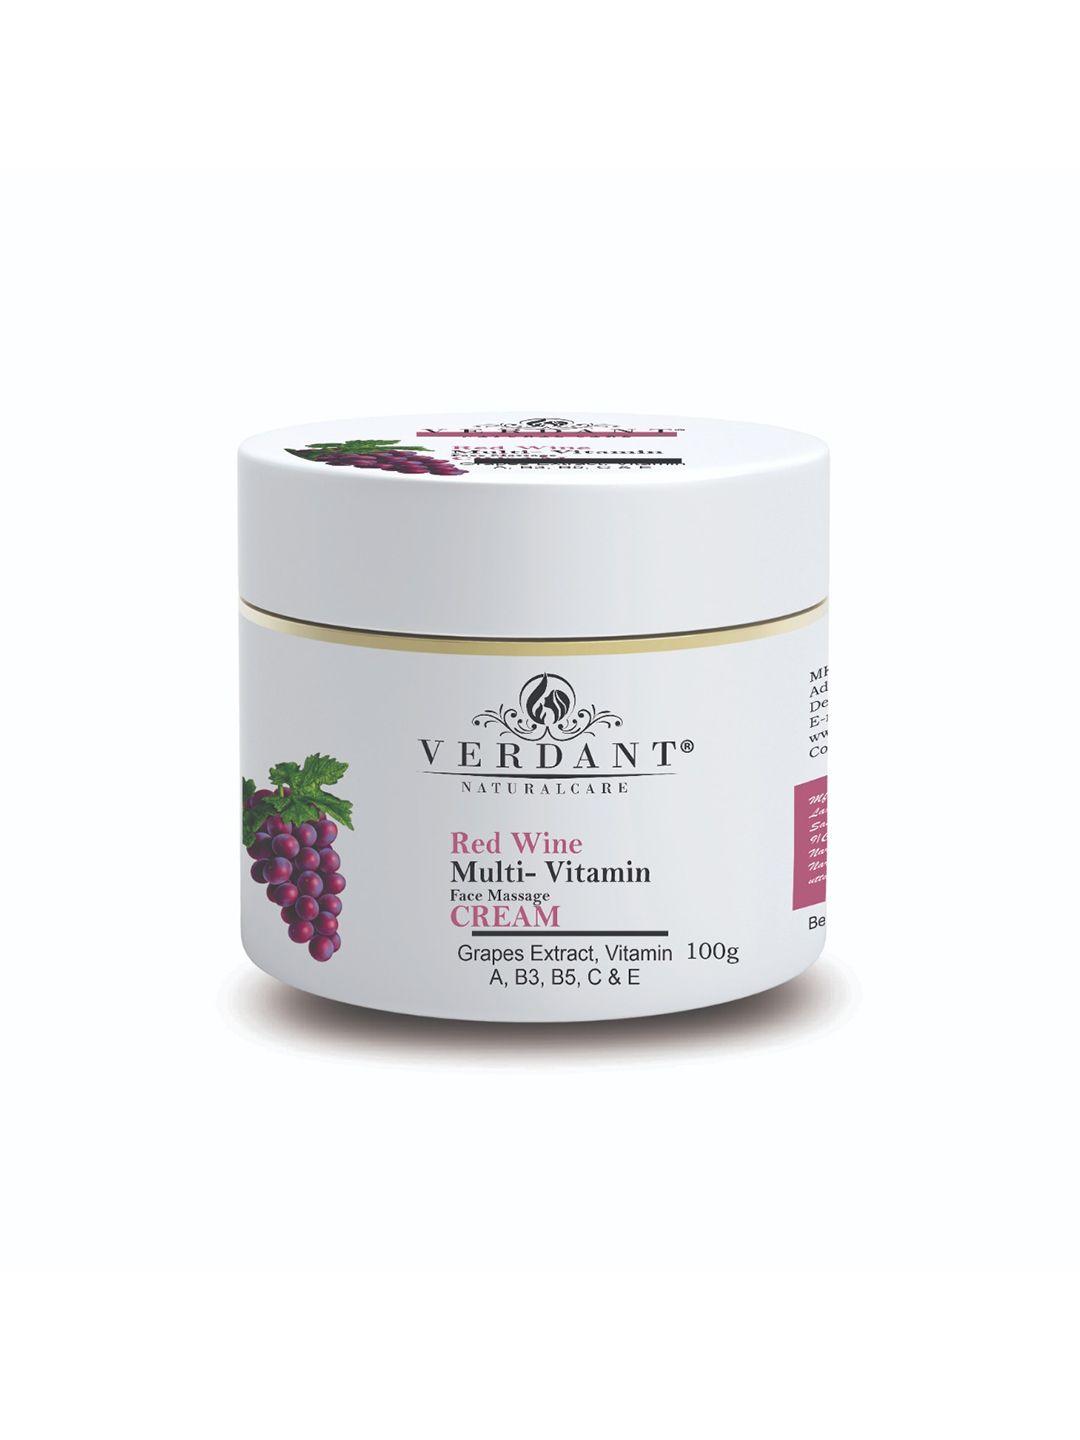 verdant natural care multi-vitamin red wine face massage cream